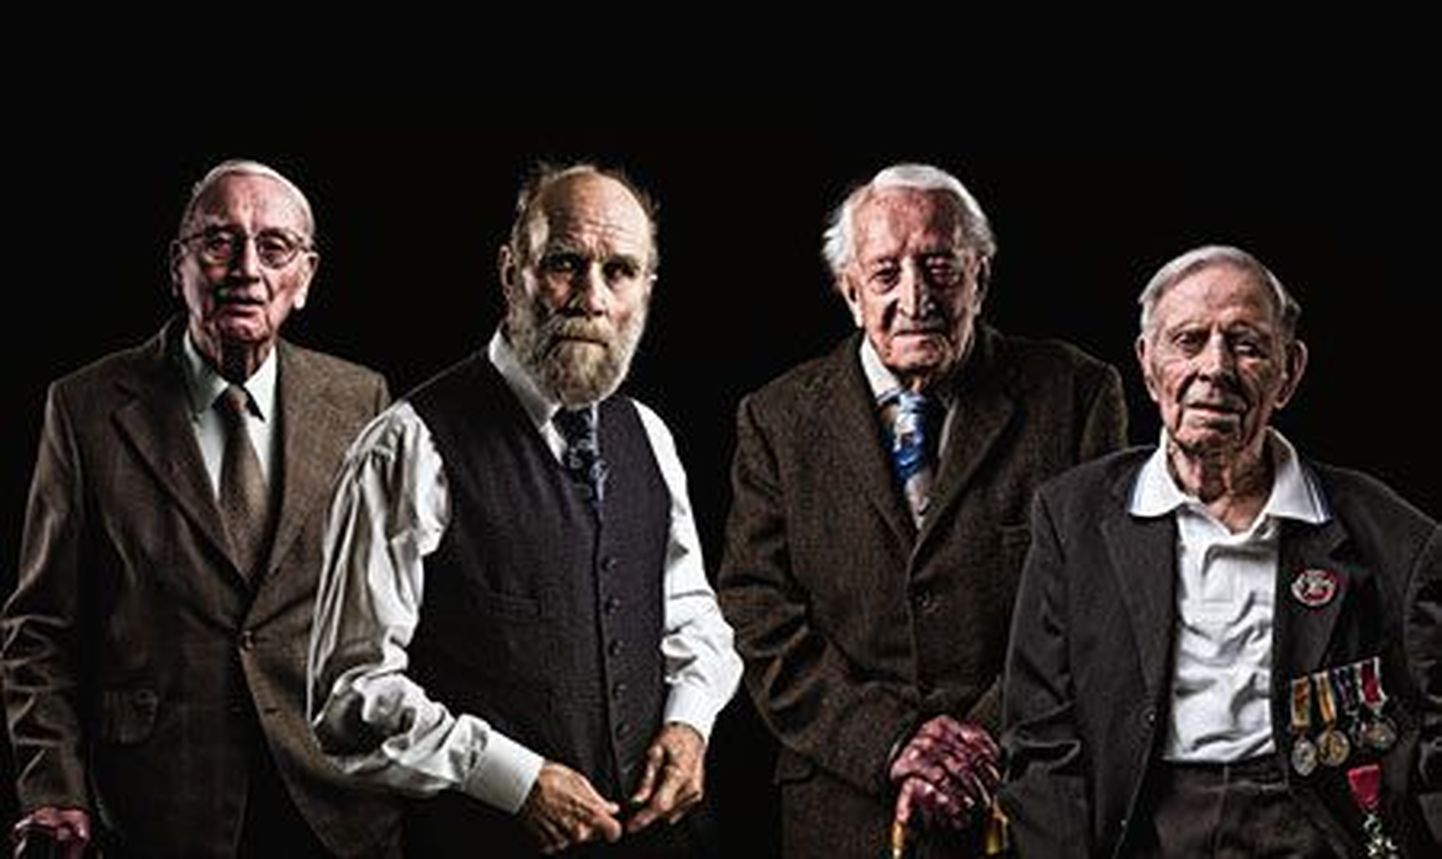 FHMi palgatud neli 100-aastast kolumnisti (vasakult paremale) Alec Holden, Buster Martin, Eric Woodward ja Harry Patch